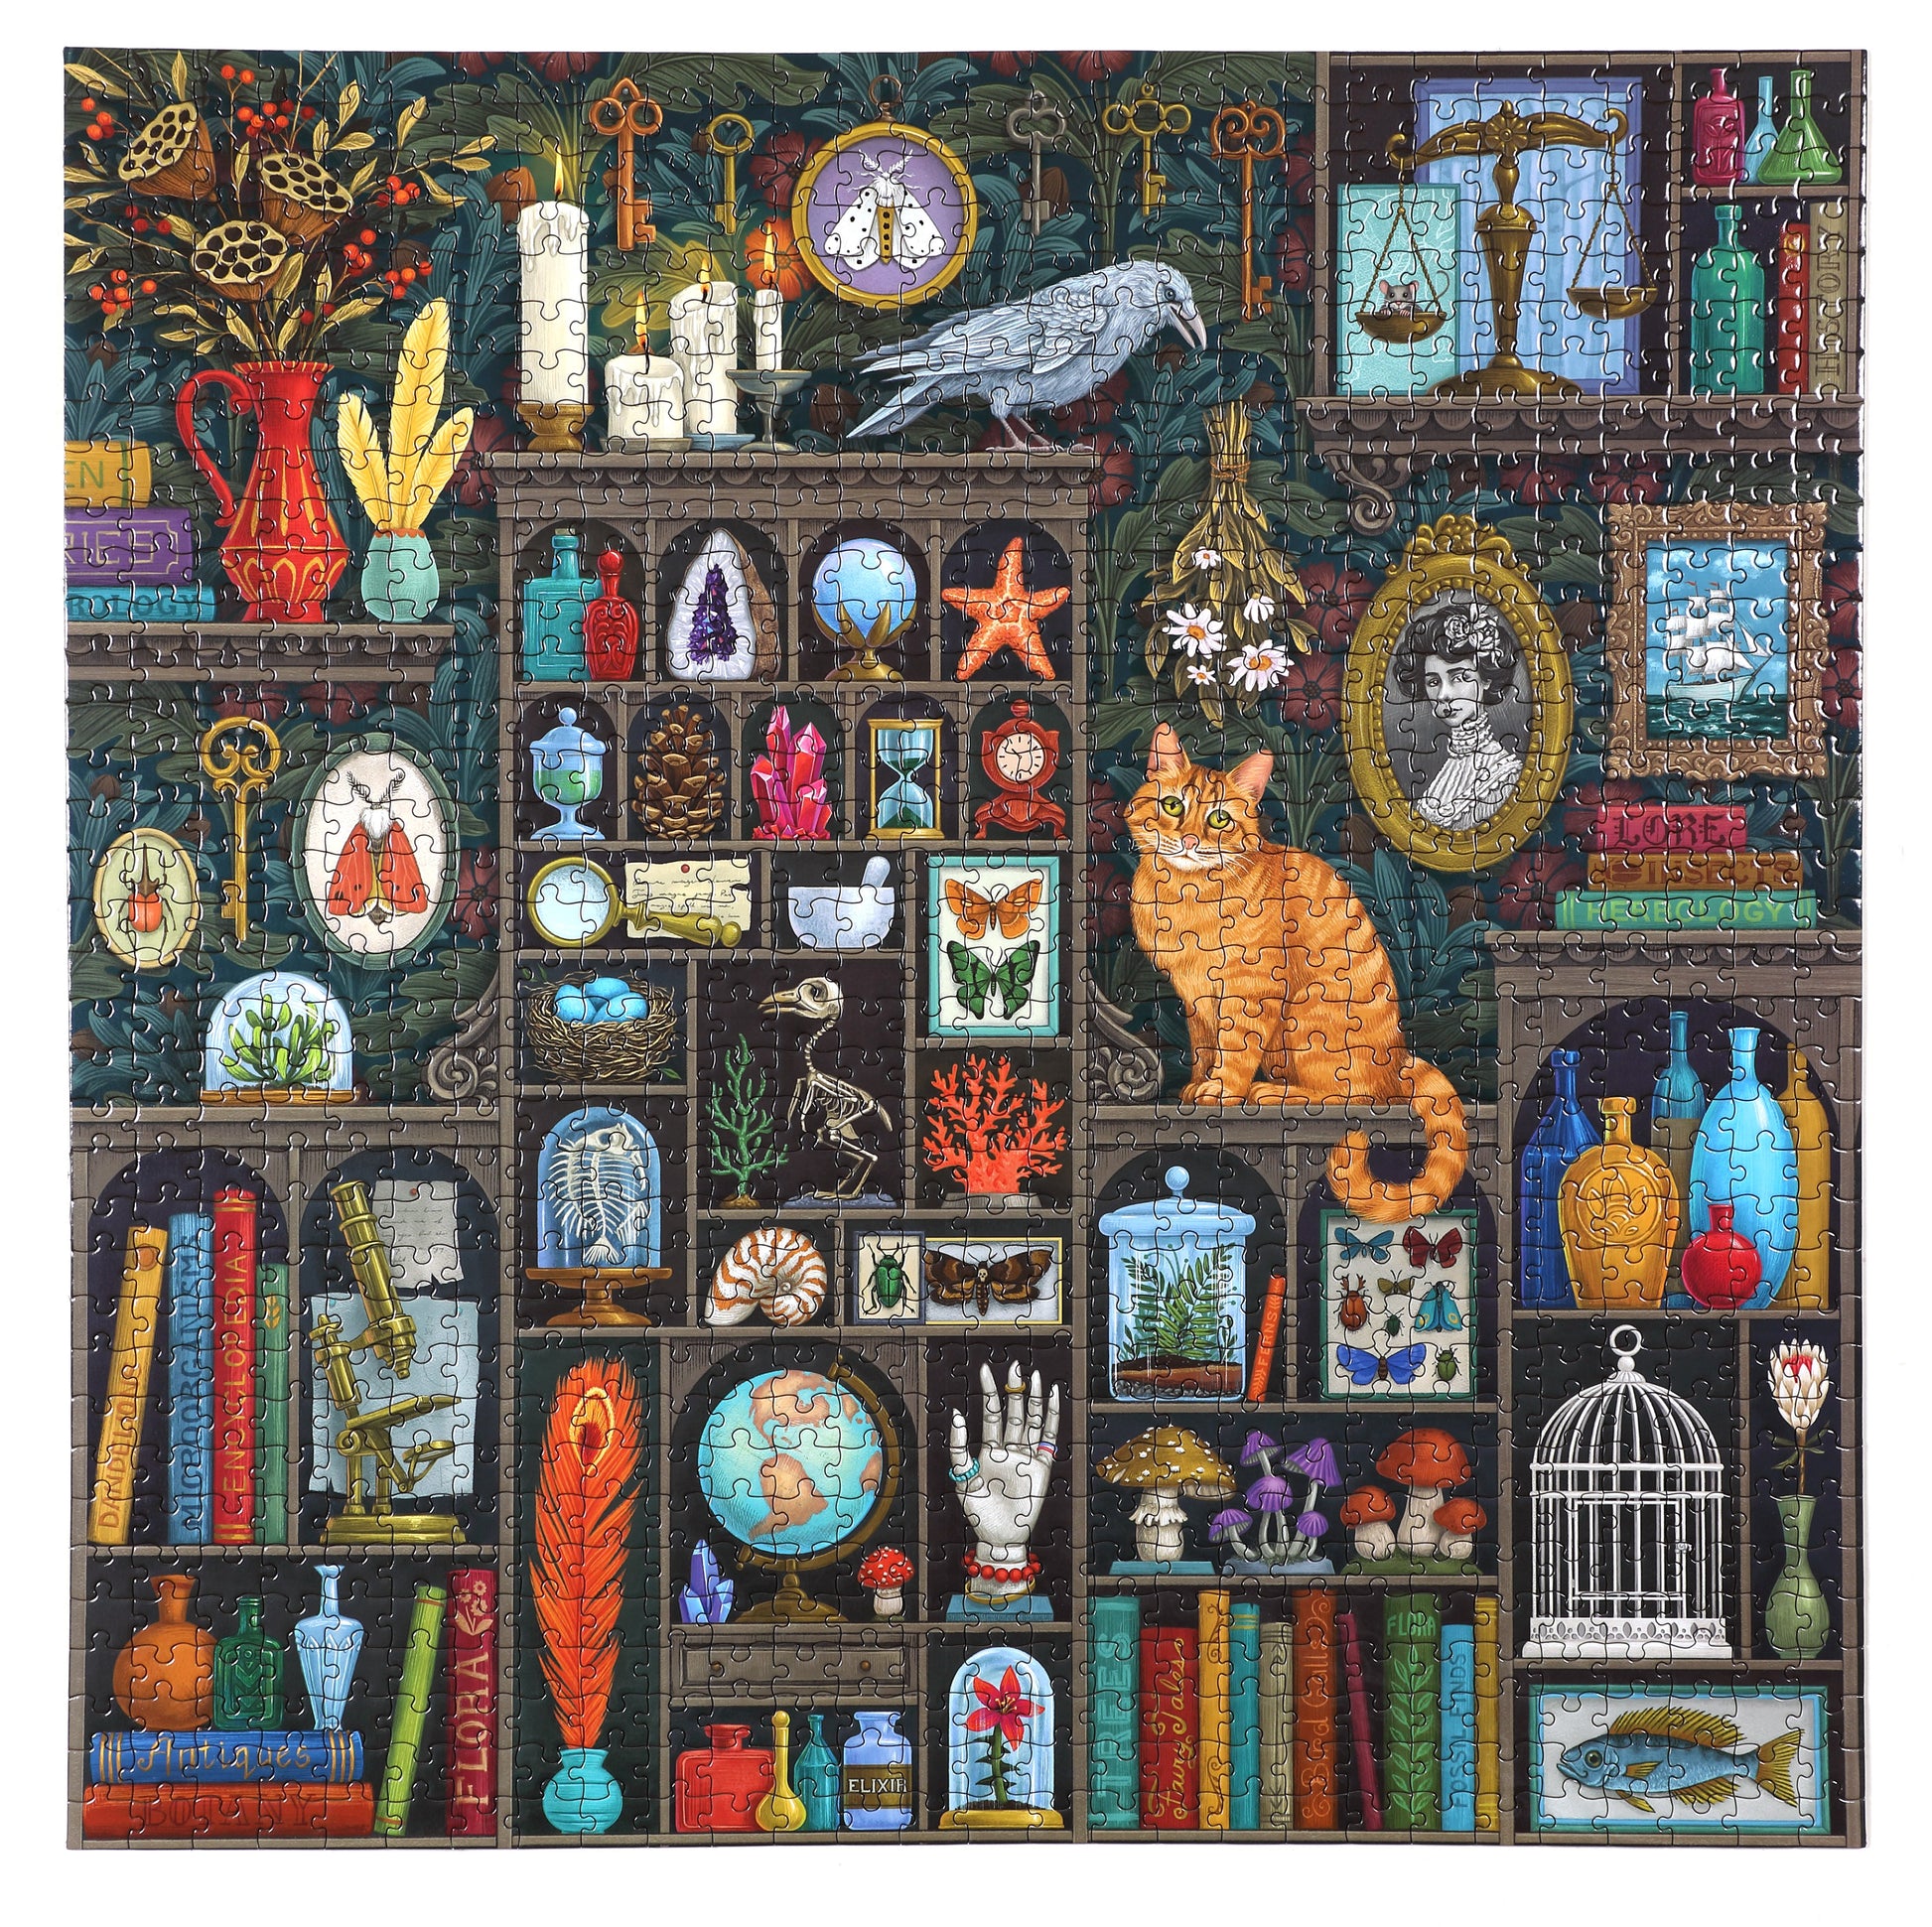 Alchemist's Cabinet 1000 Piece Jigsaw Puzzle